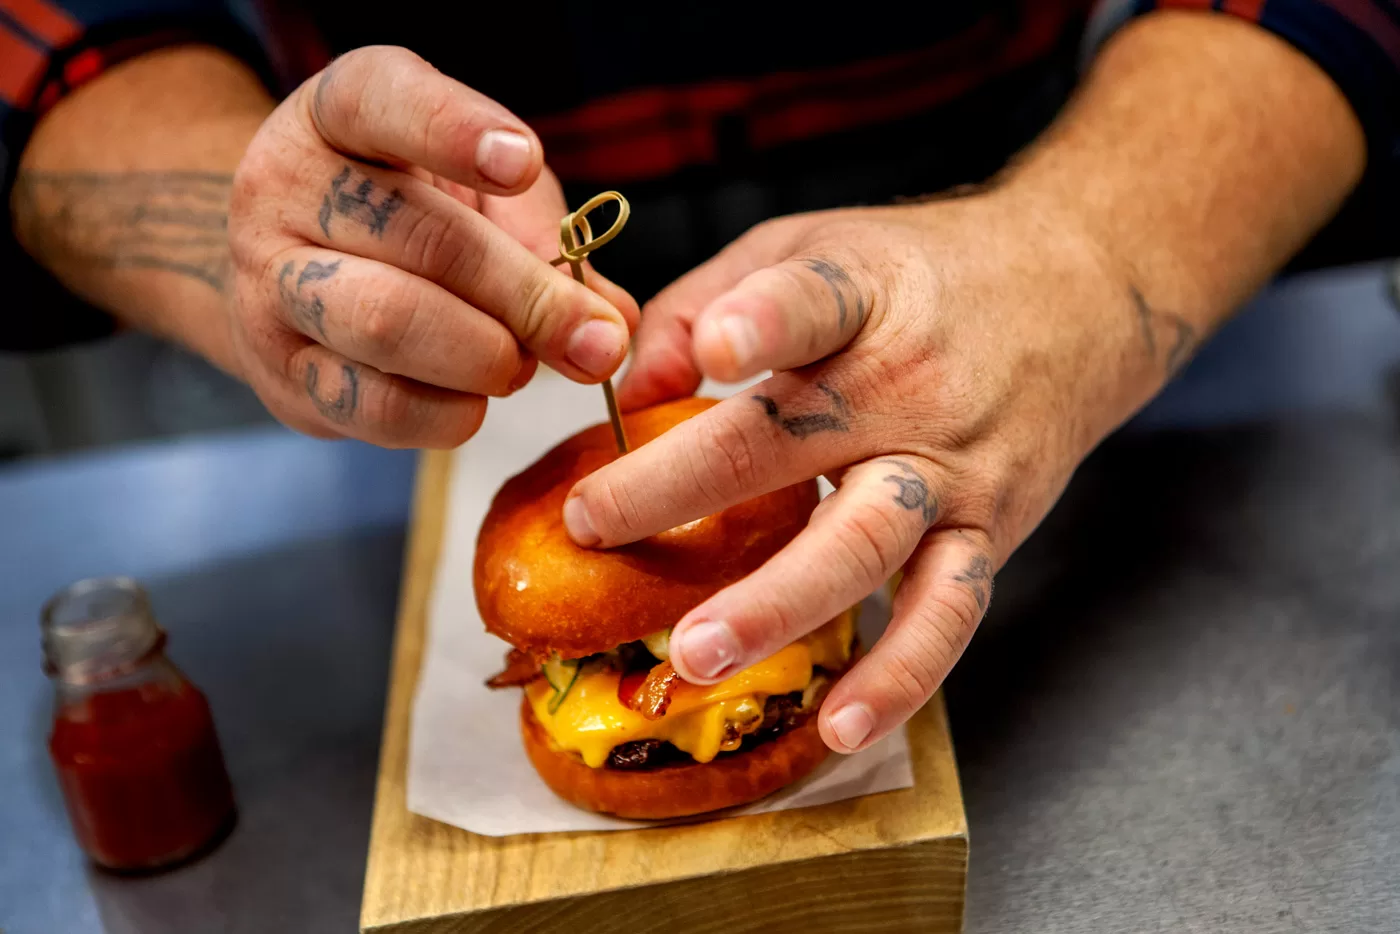 Restaurant Chef preparing cheeseburger. Knuckle Tattoos Chicago Food Photographers, Milwaukee food photogaphy